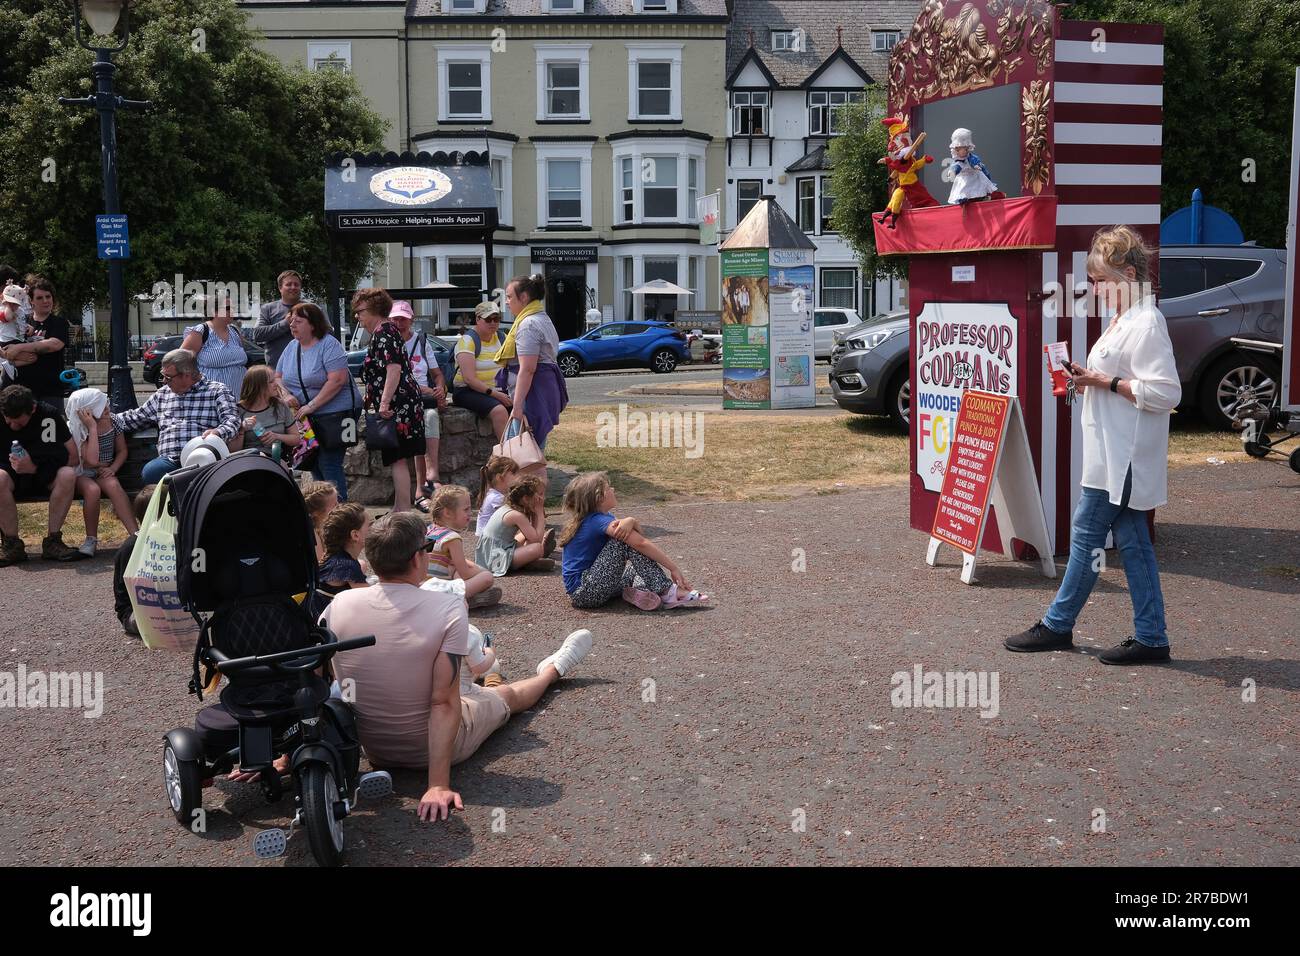 Children watching Professor Codman's traditional Punch and Judy show on Llandudno promenade. Wales, Britain, Uk holiday entertainment Stock Photo